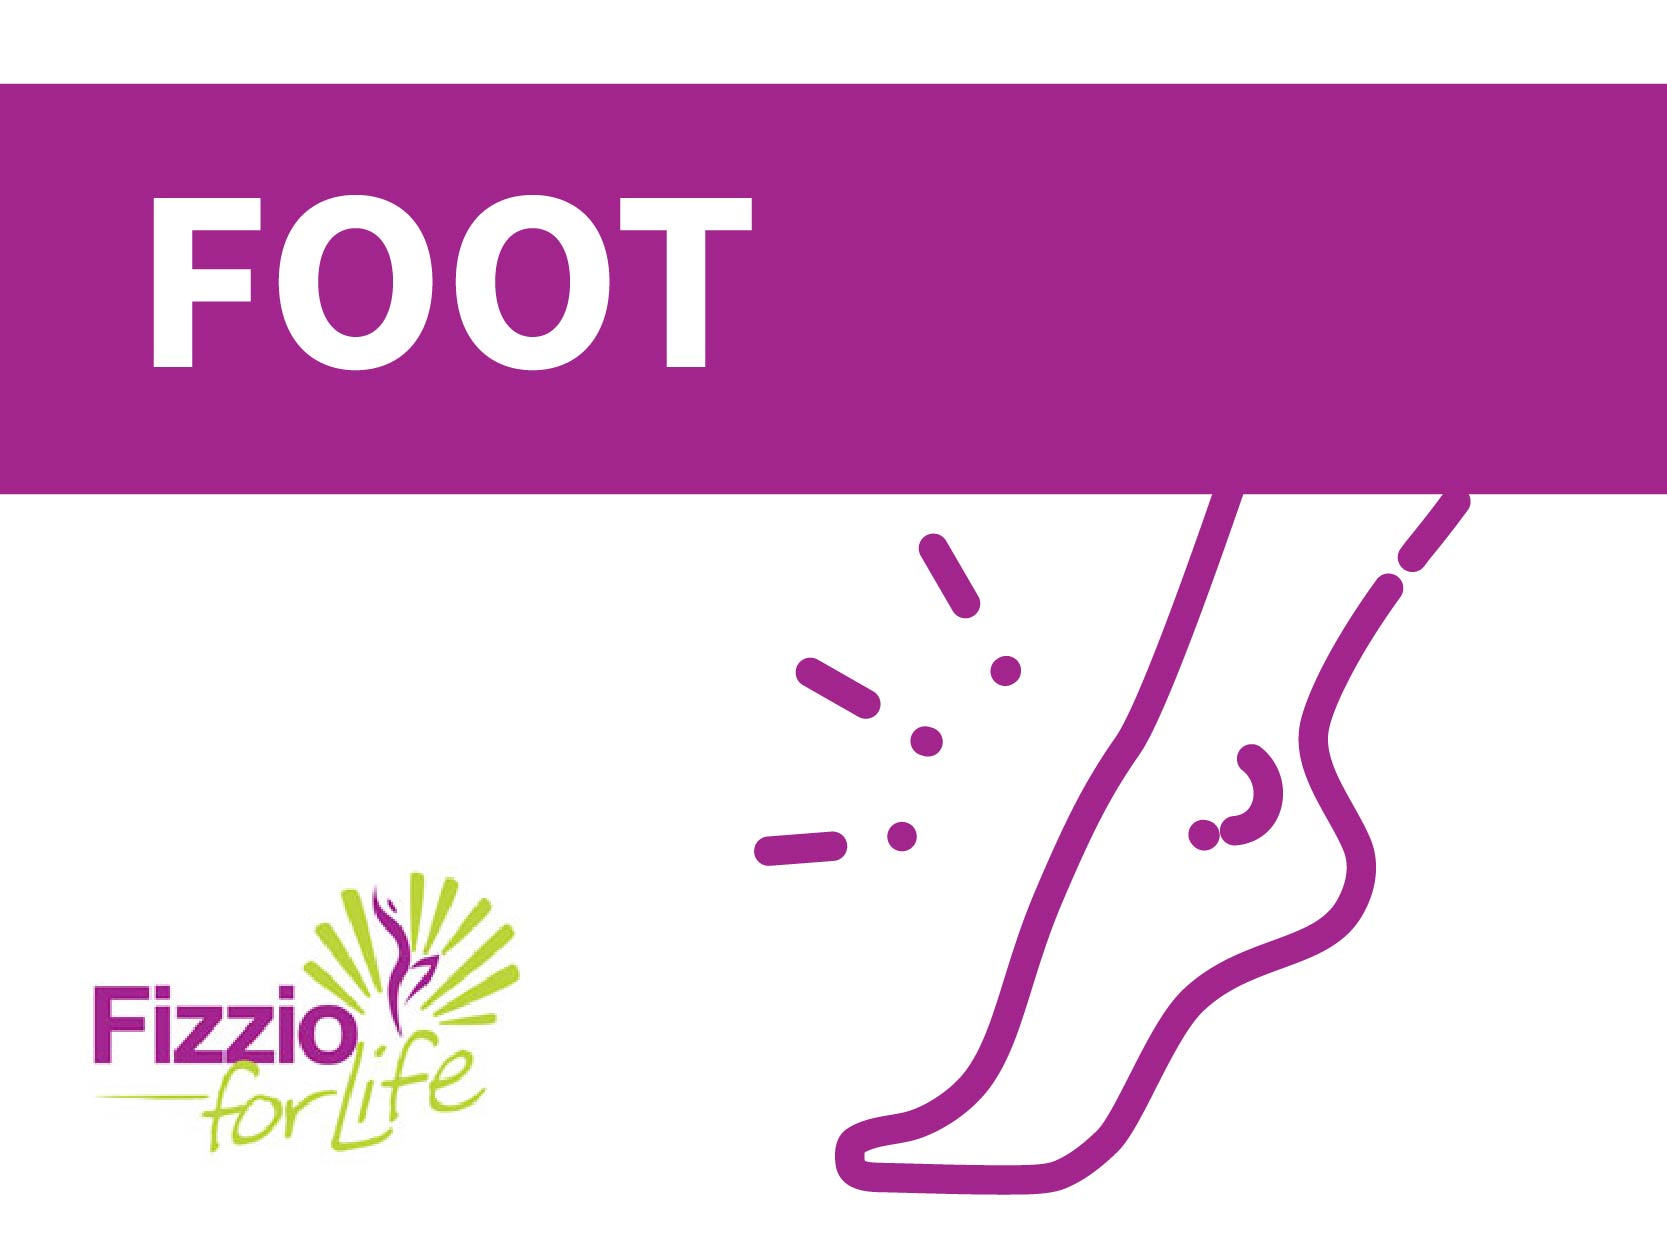 Fizzio-Your-body-foot